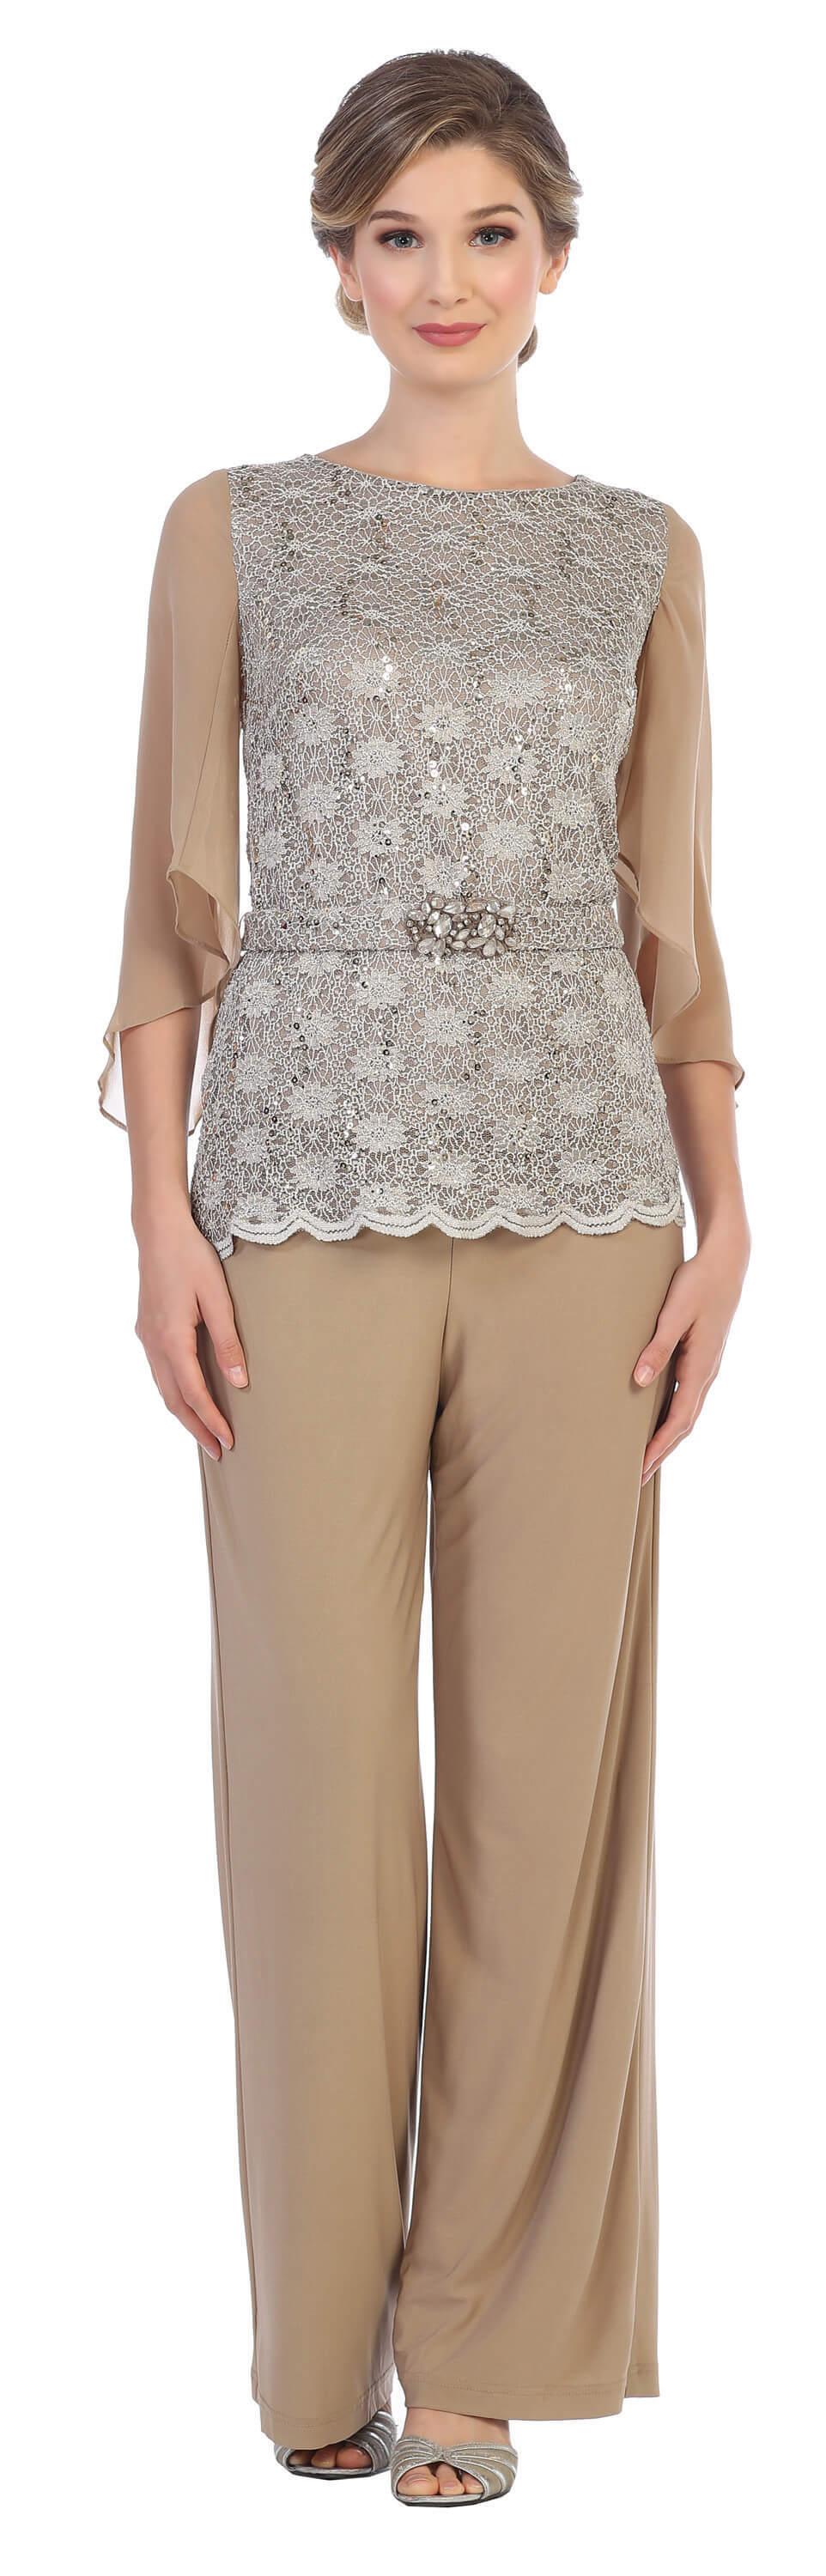 Mother of the Bride Plus Size Pant Suit - The Dress Outlet Eva Fashion